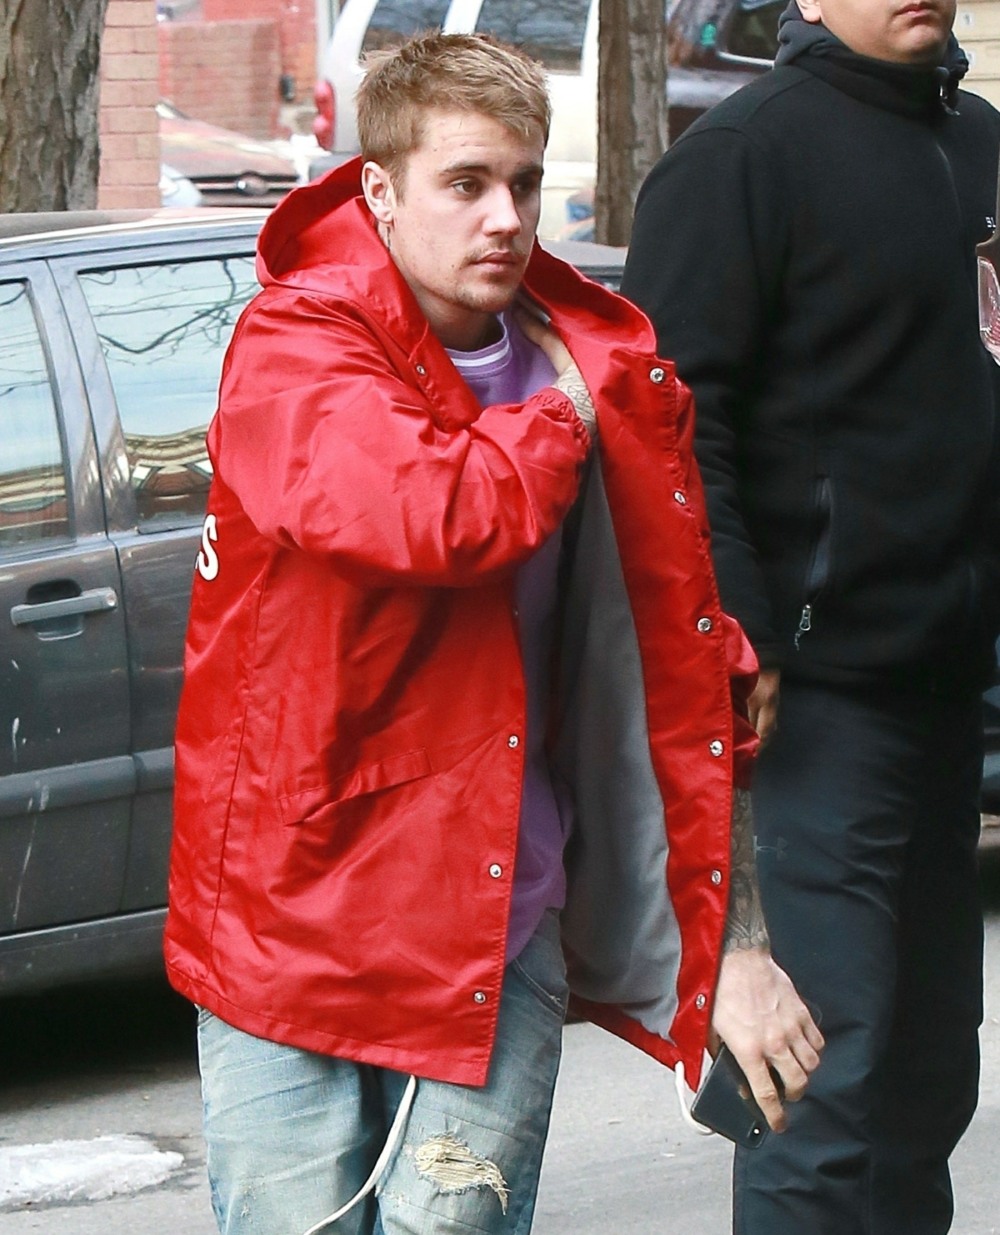 Justin Bieber returning to Hailey Baldwin's apartment